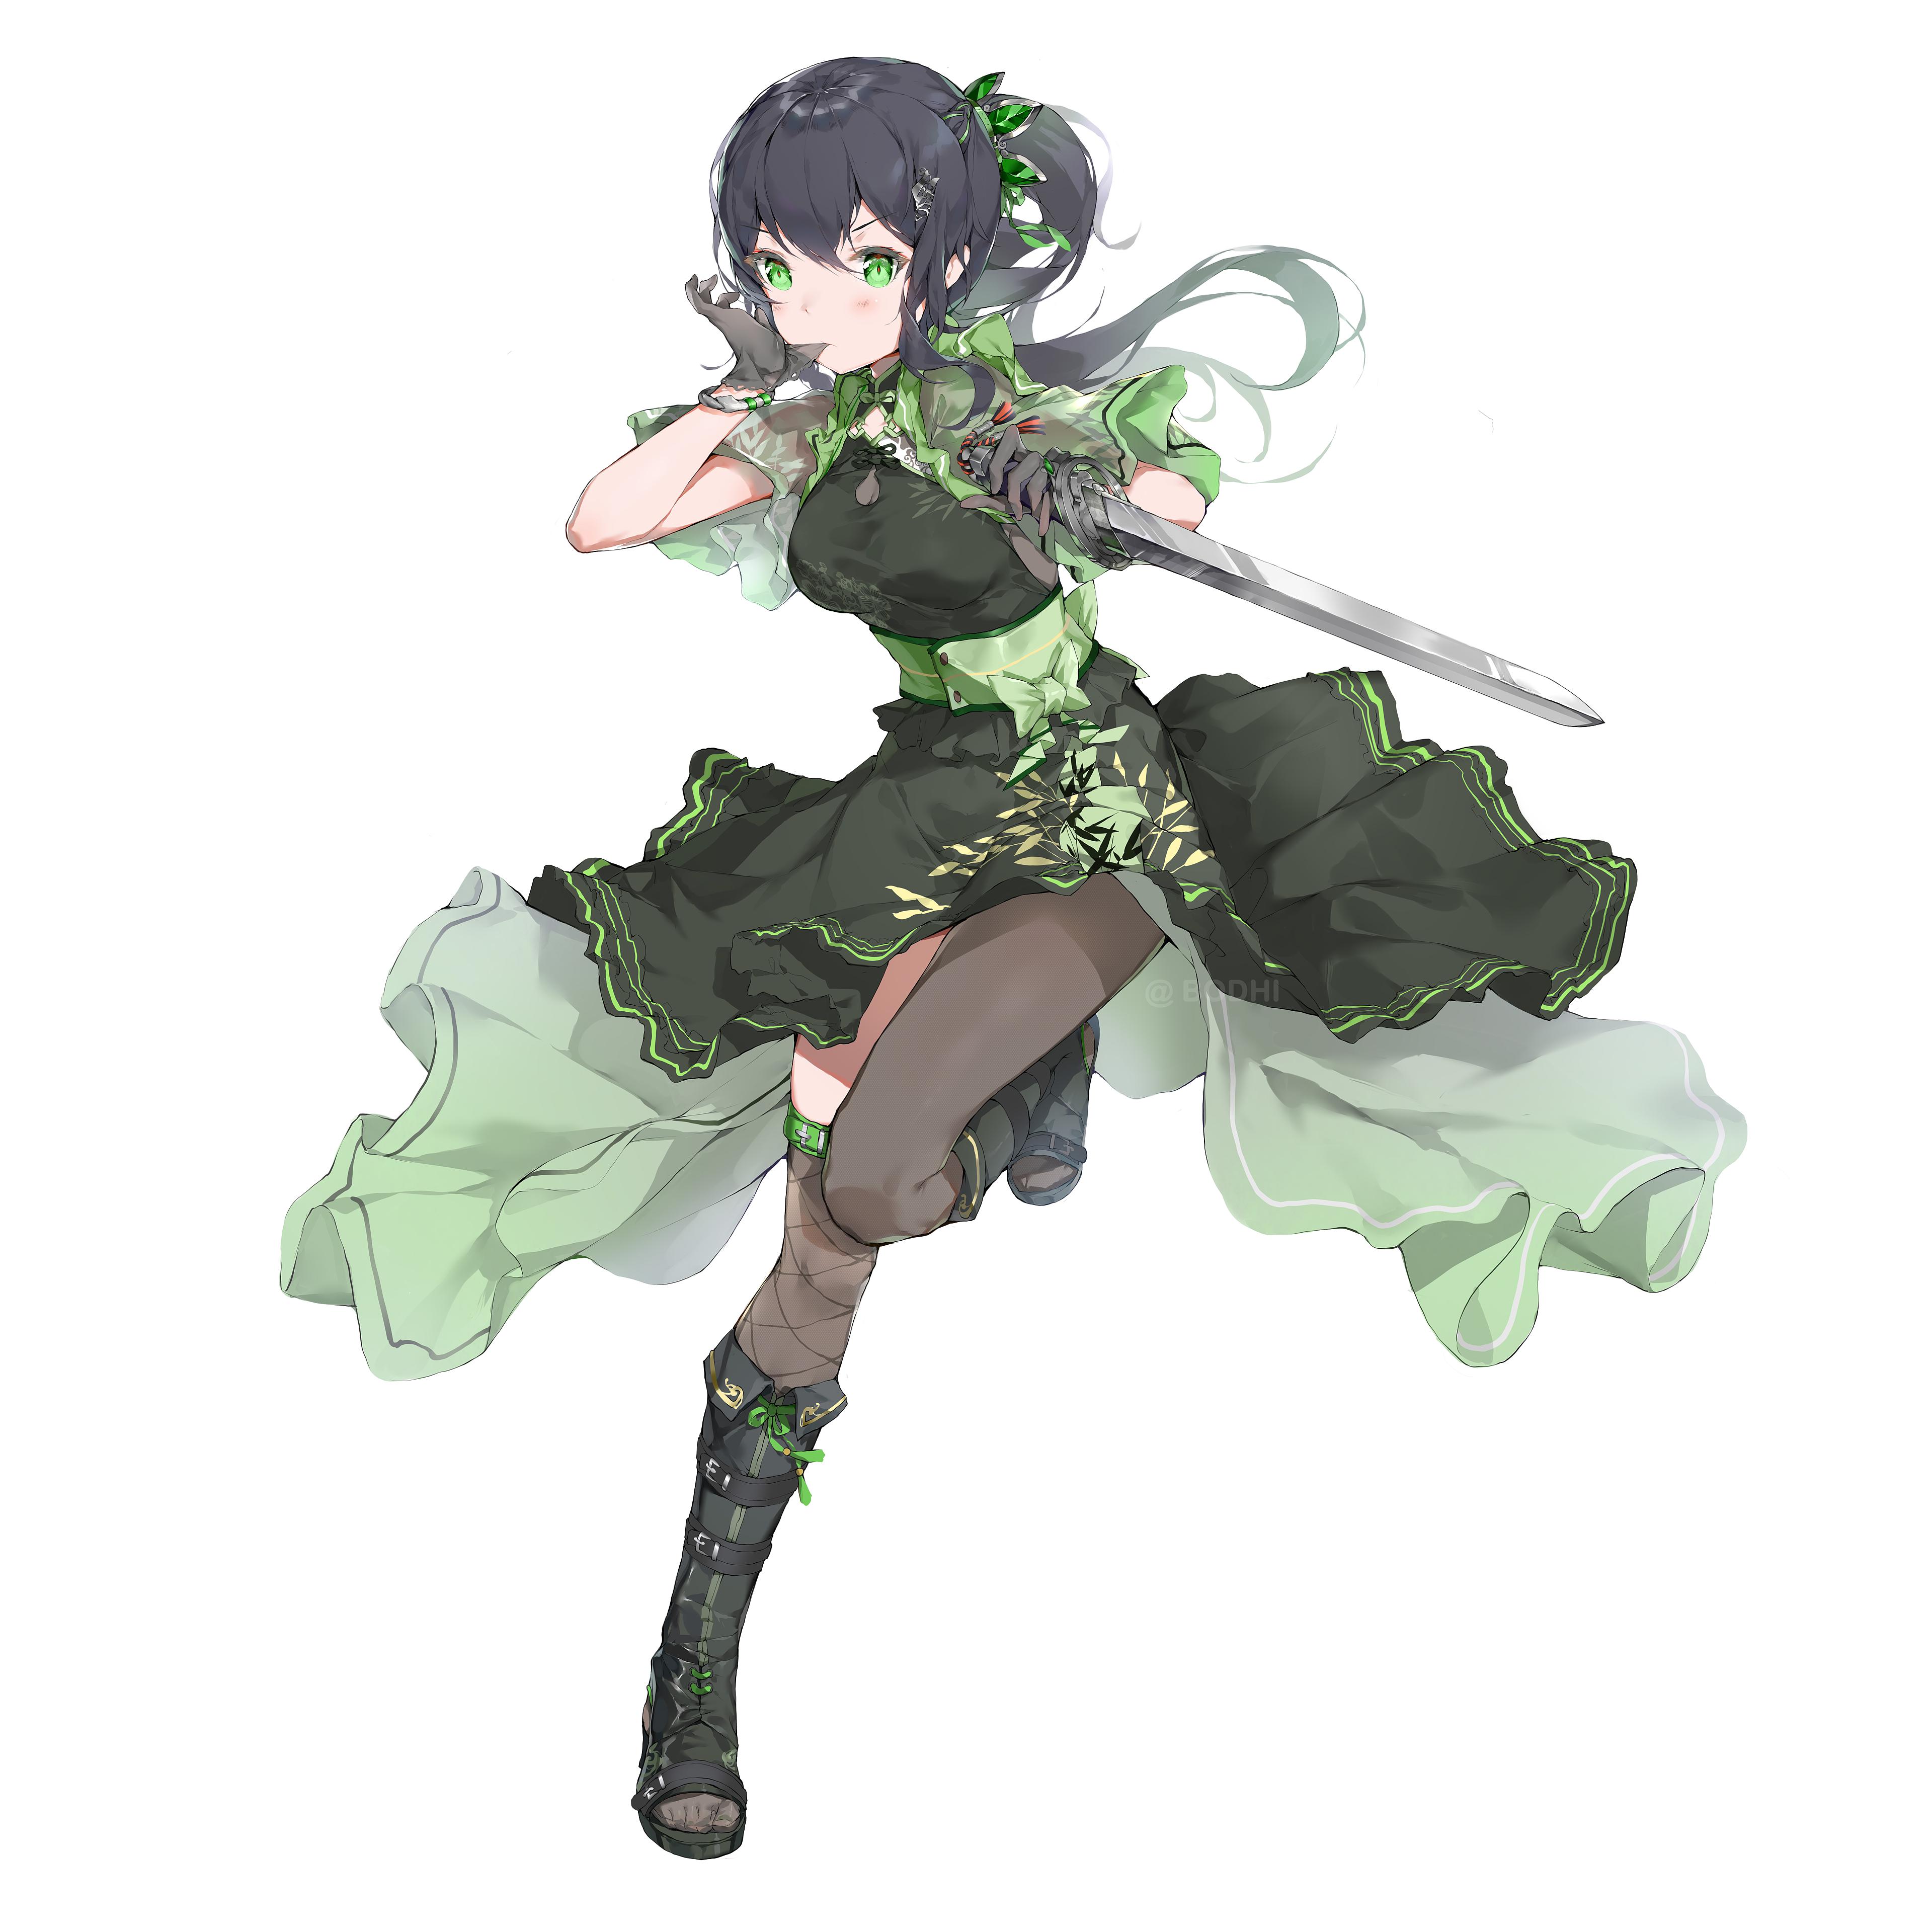 Anime 3840x3840 Bodhi Wushushenghua anime girls green eyes dress sword weapon gloves simple background minimalism